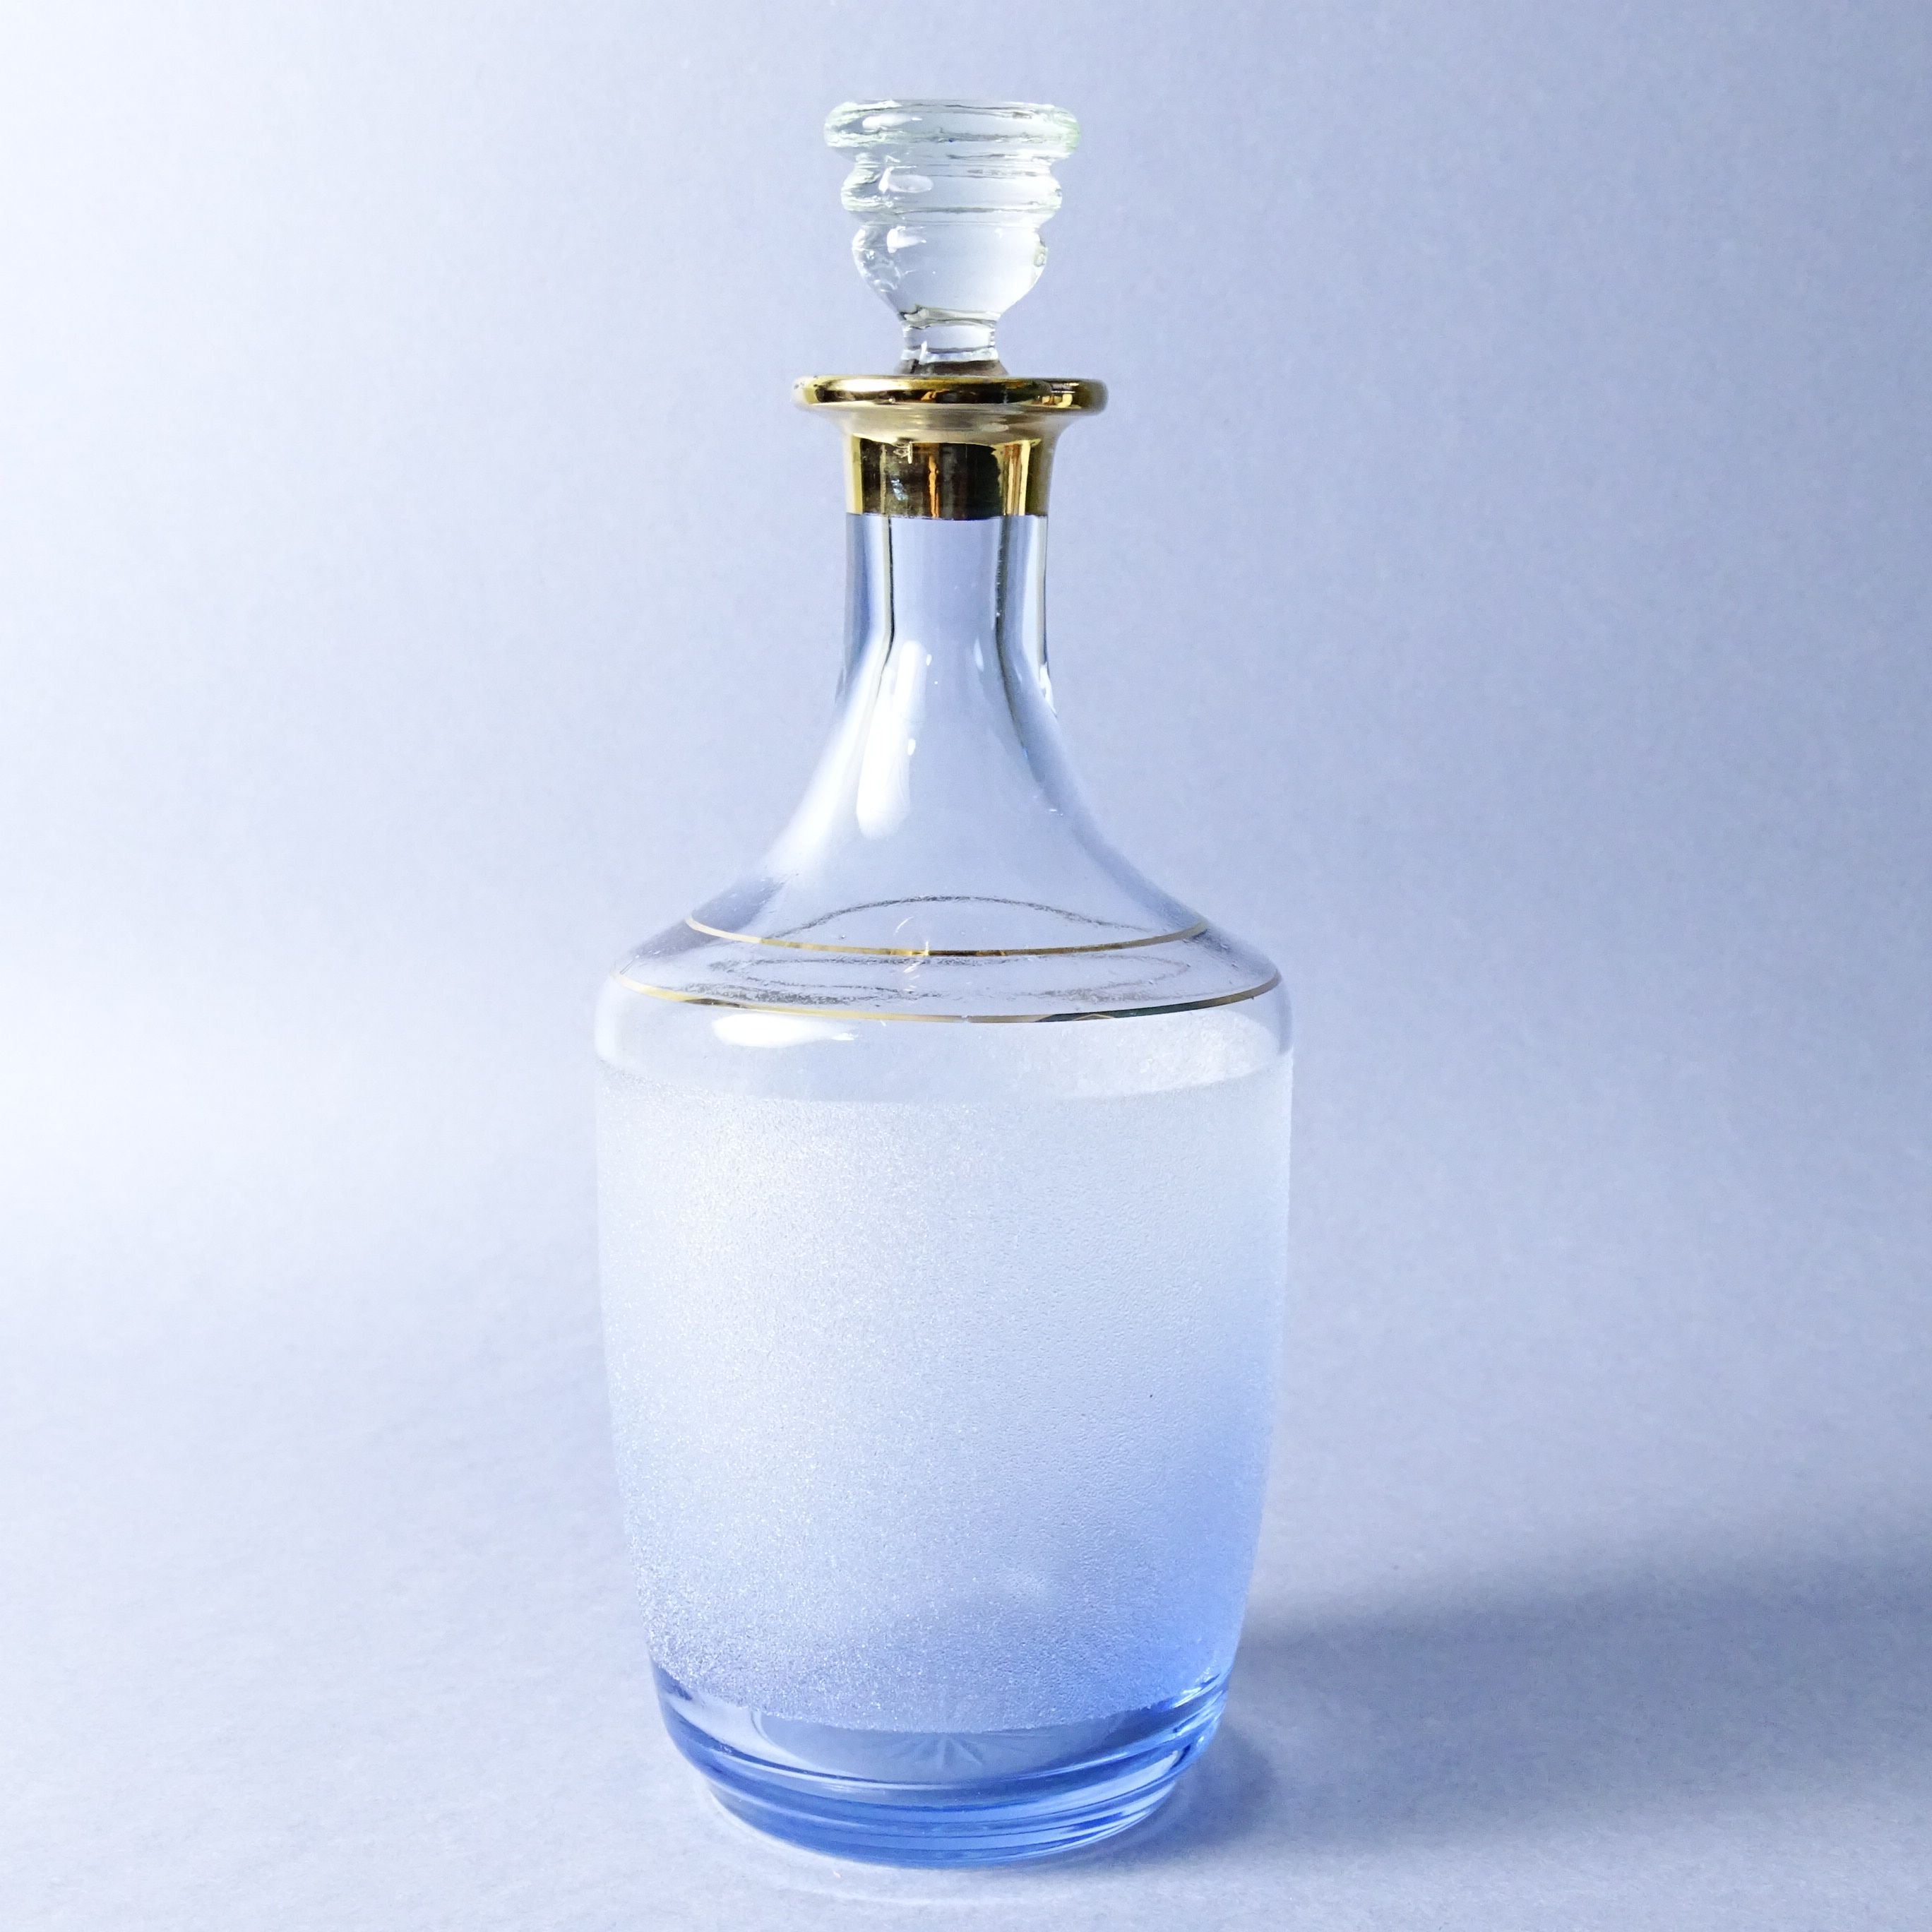 piękna stara błękitna szklana karafka lata 60-te